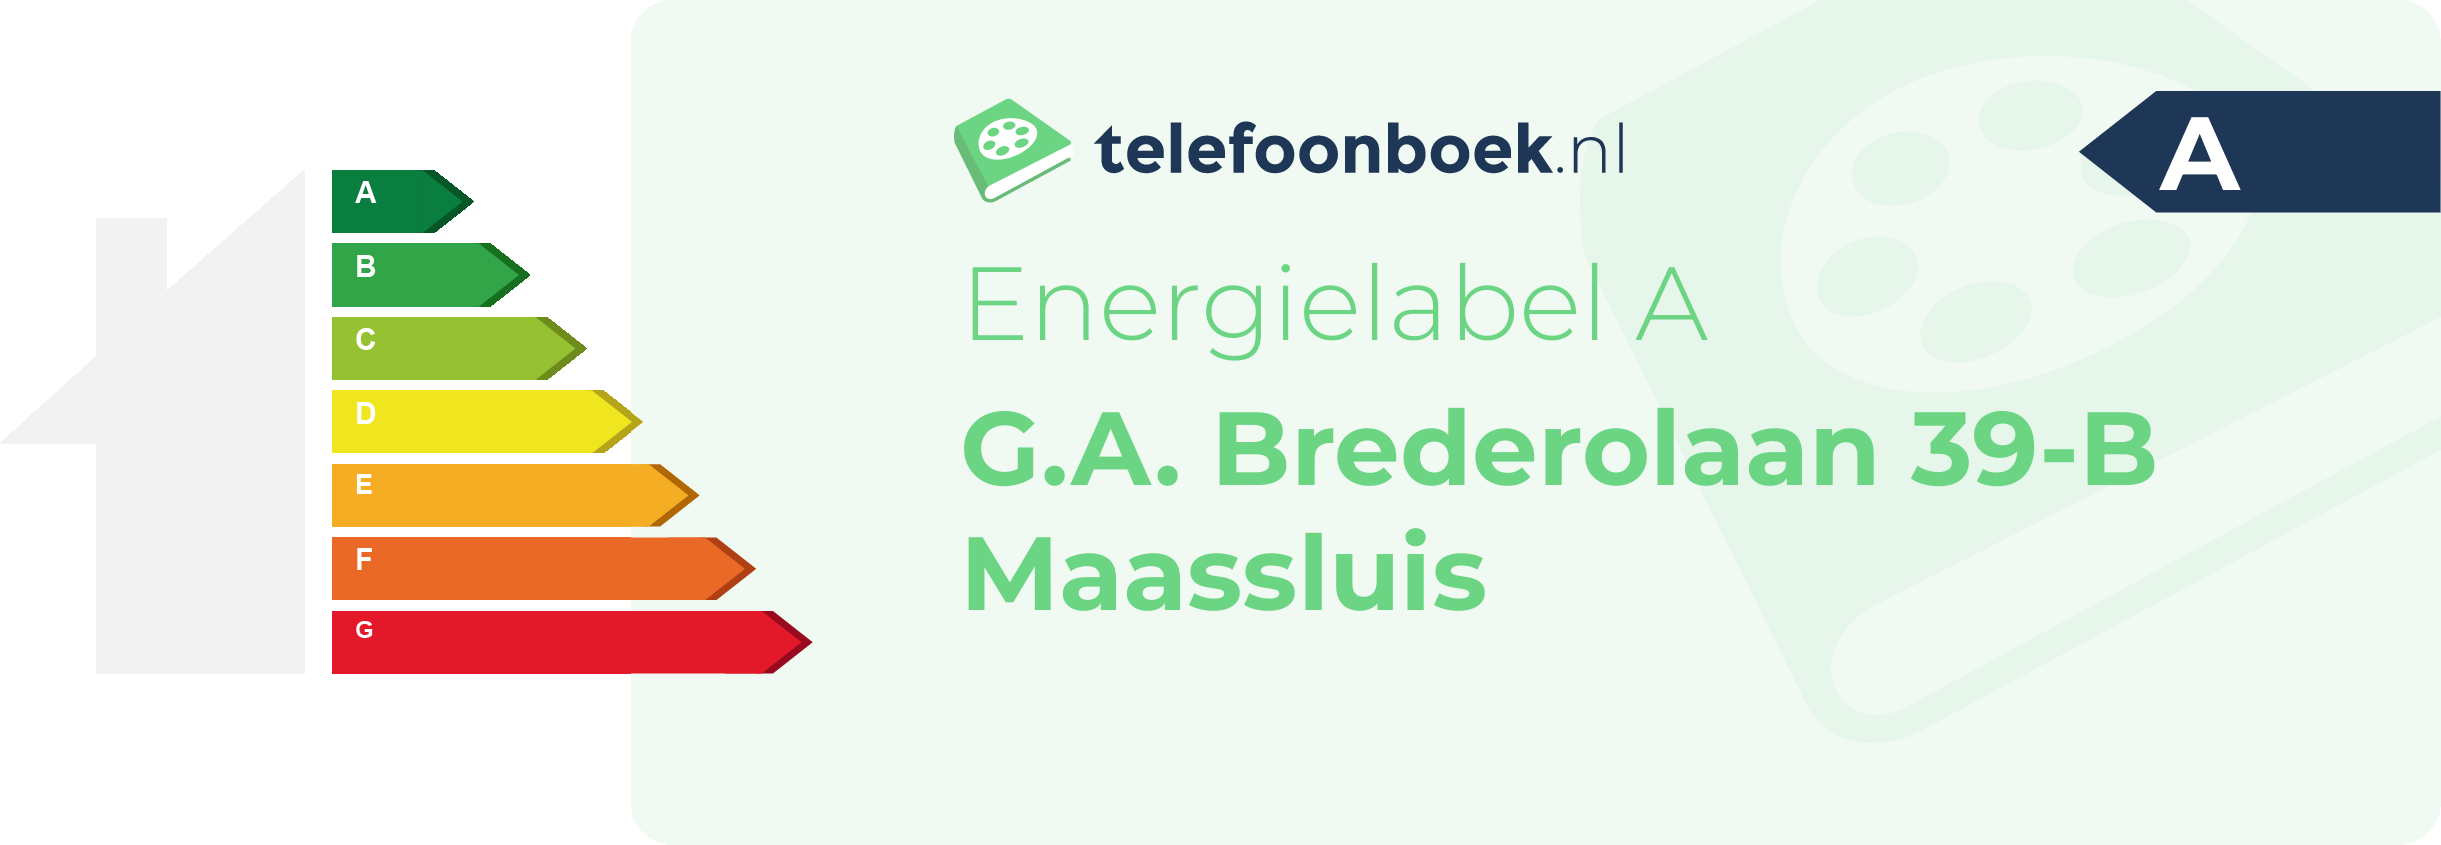 Energielabel G.A. Brederolaan 39-B Maassluis